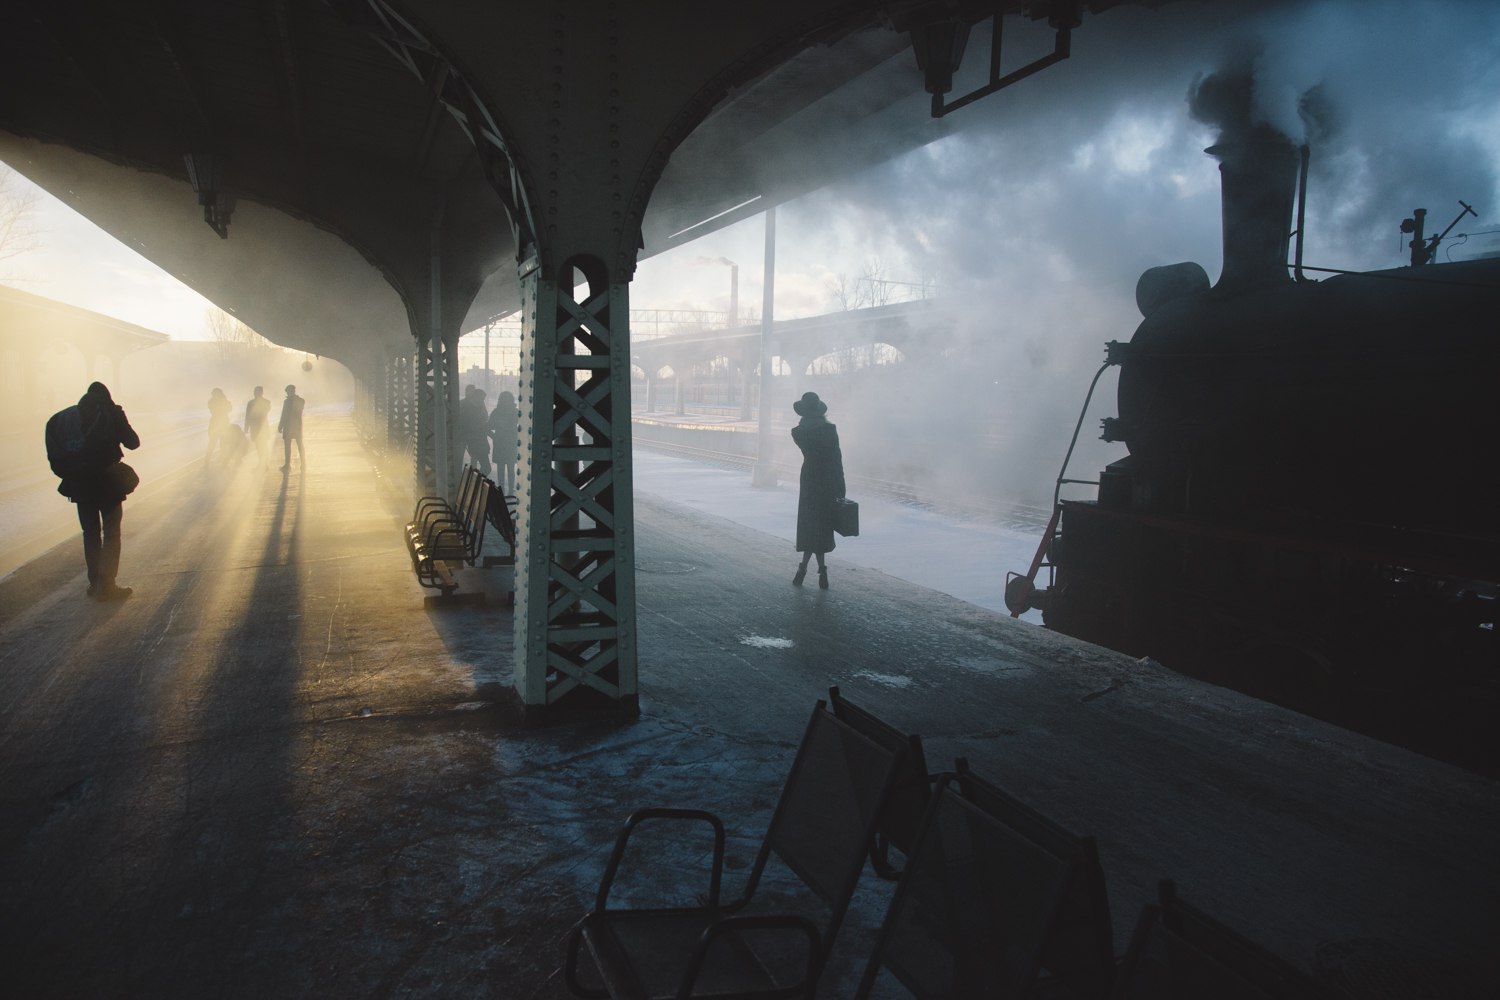 Photography Railway Train Station People Steam Locomotive Smoke Mist Shadow Bench St Petersburg Russ 1500x1000